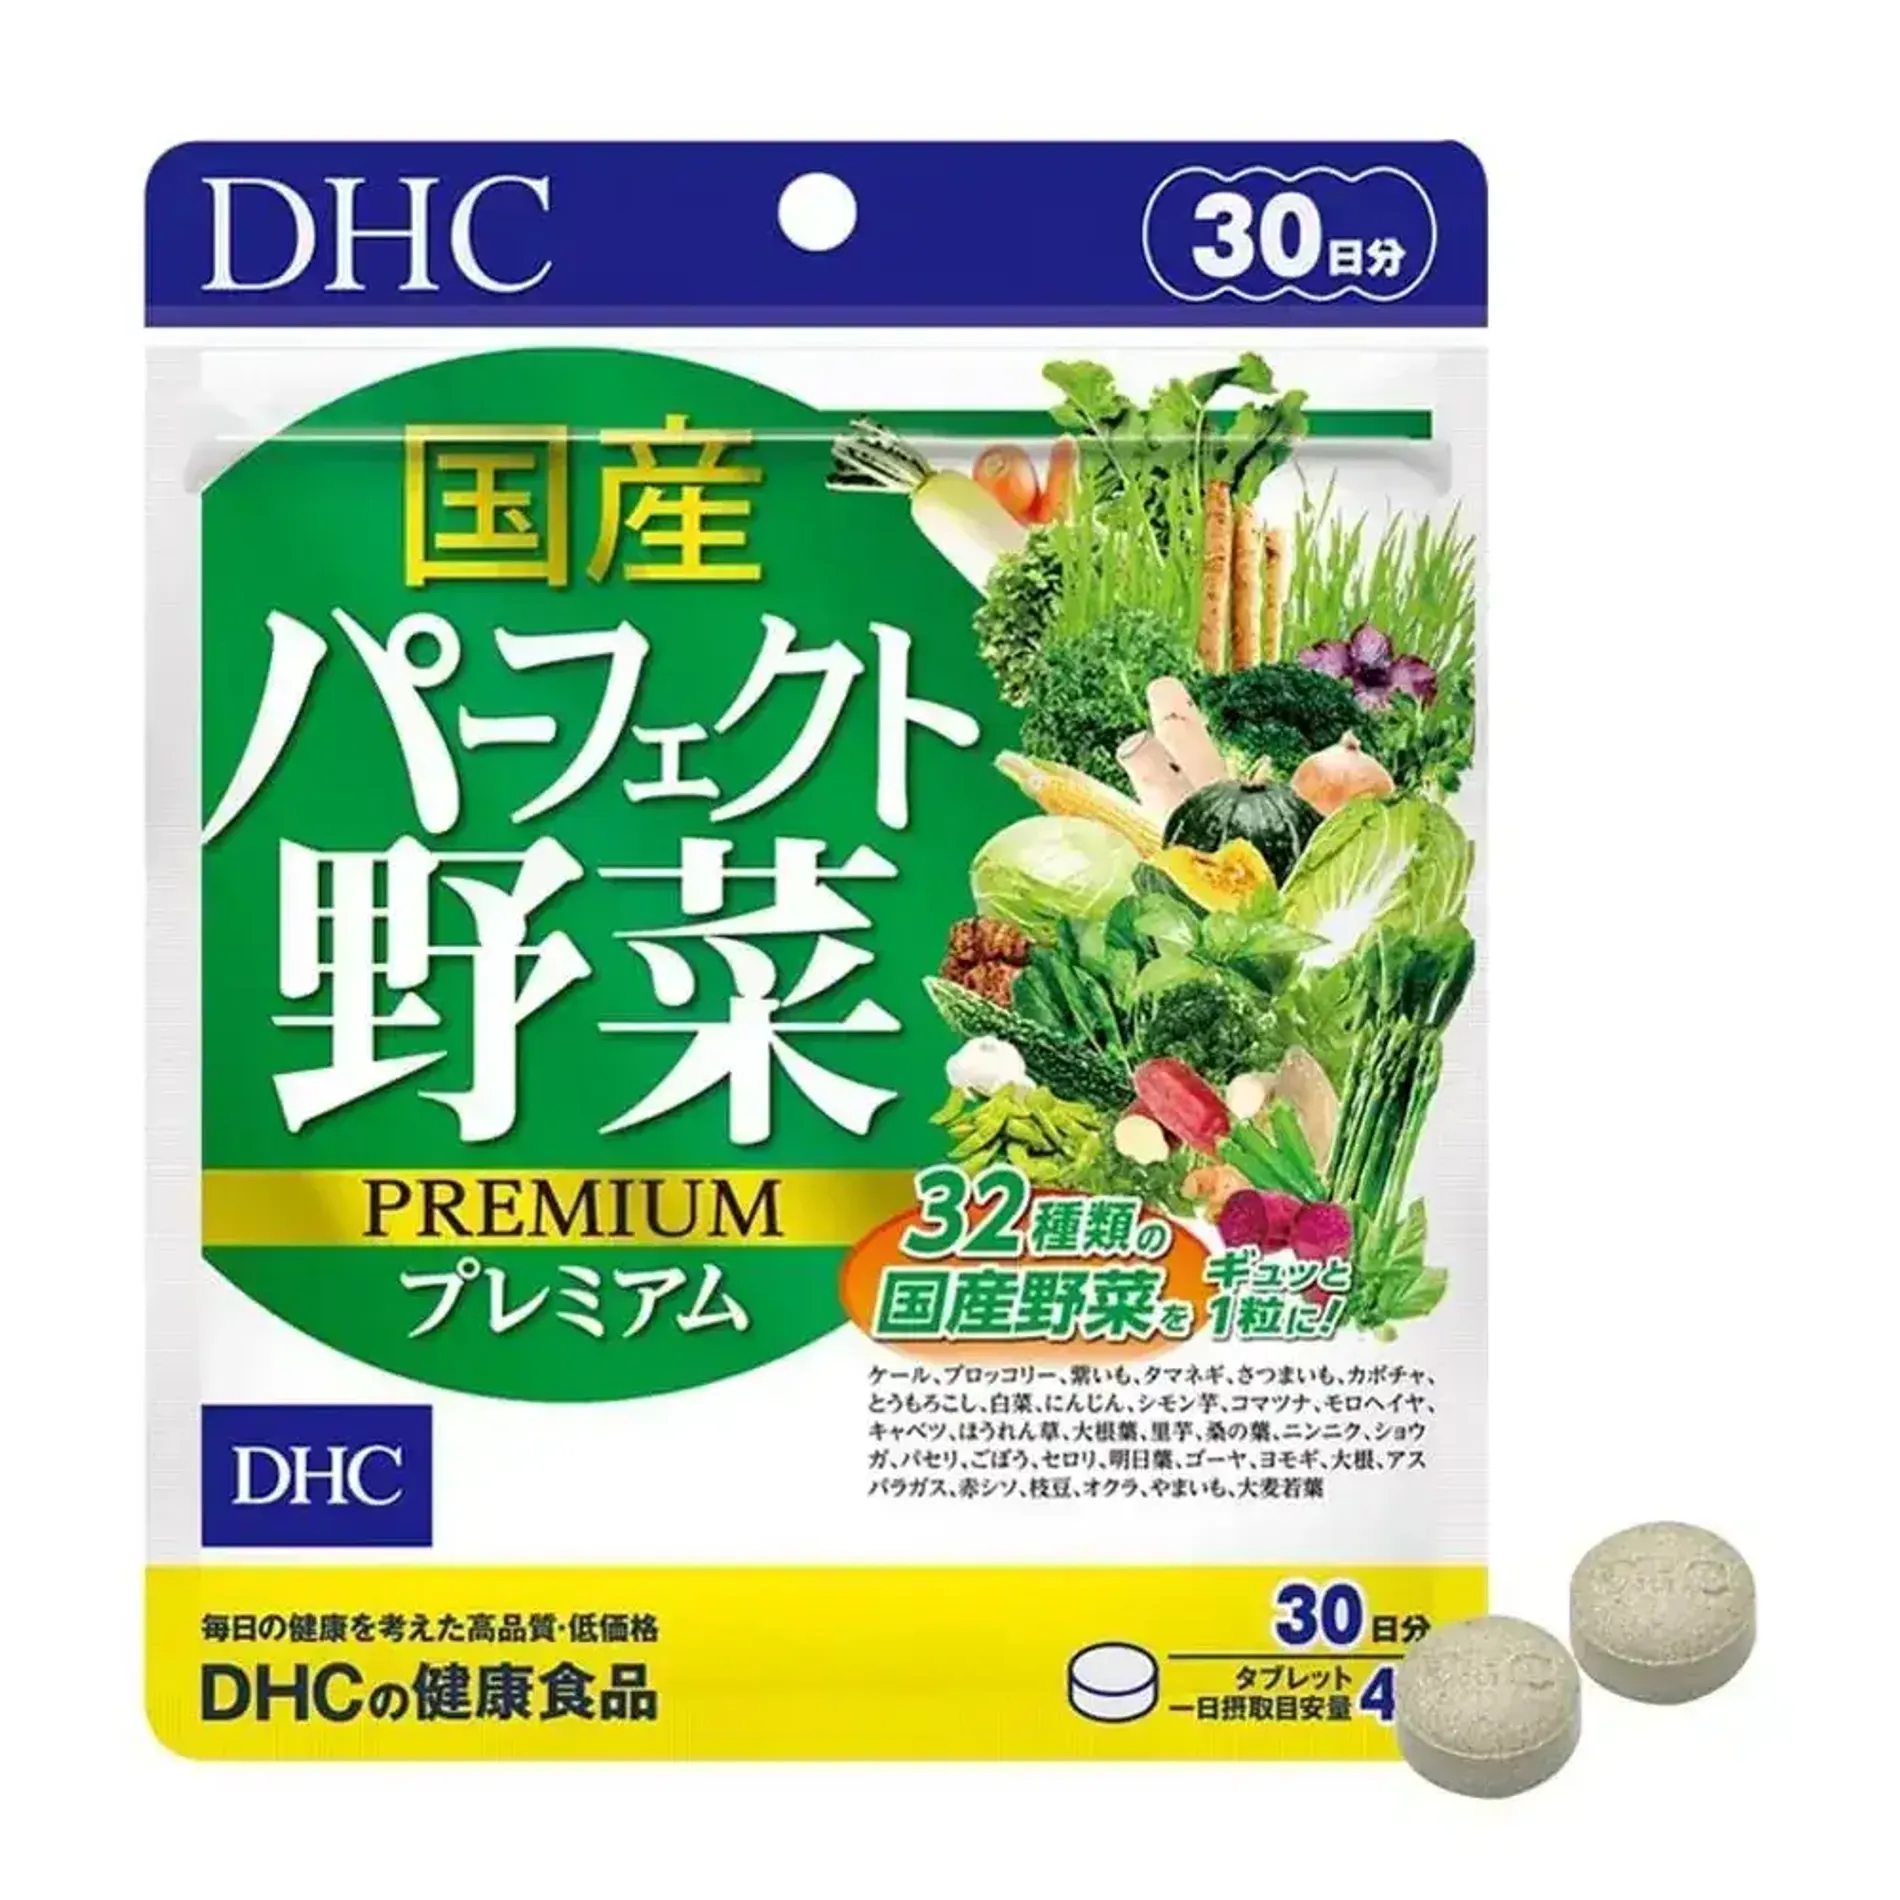 thuc-pham-bao-ve-suc-khoe-dhc-perfect-vegetable-premium-japanese-harvest-1